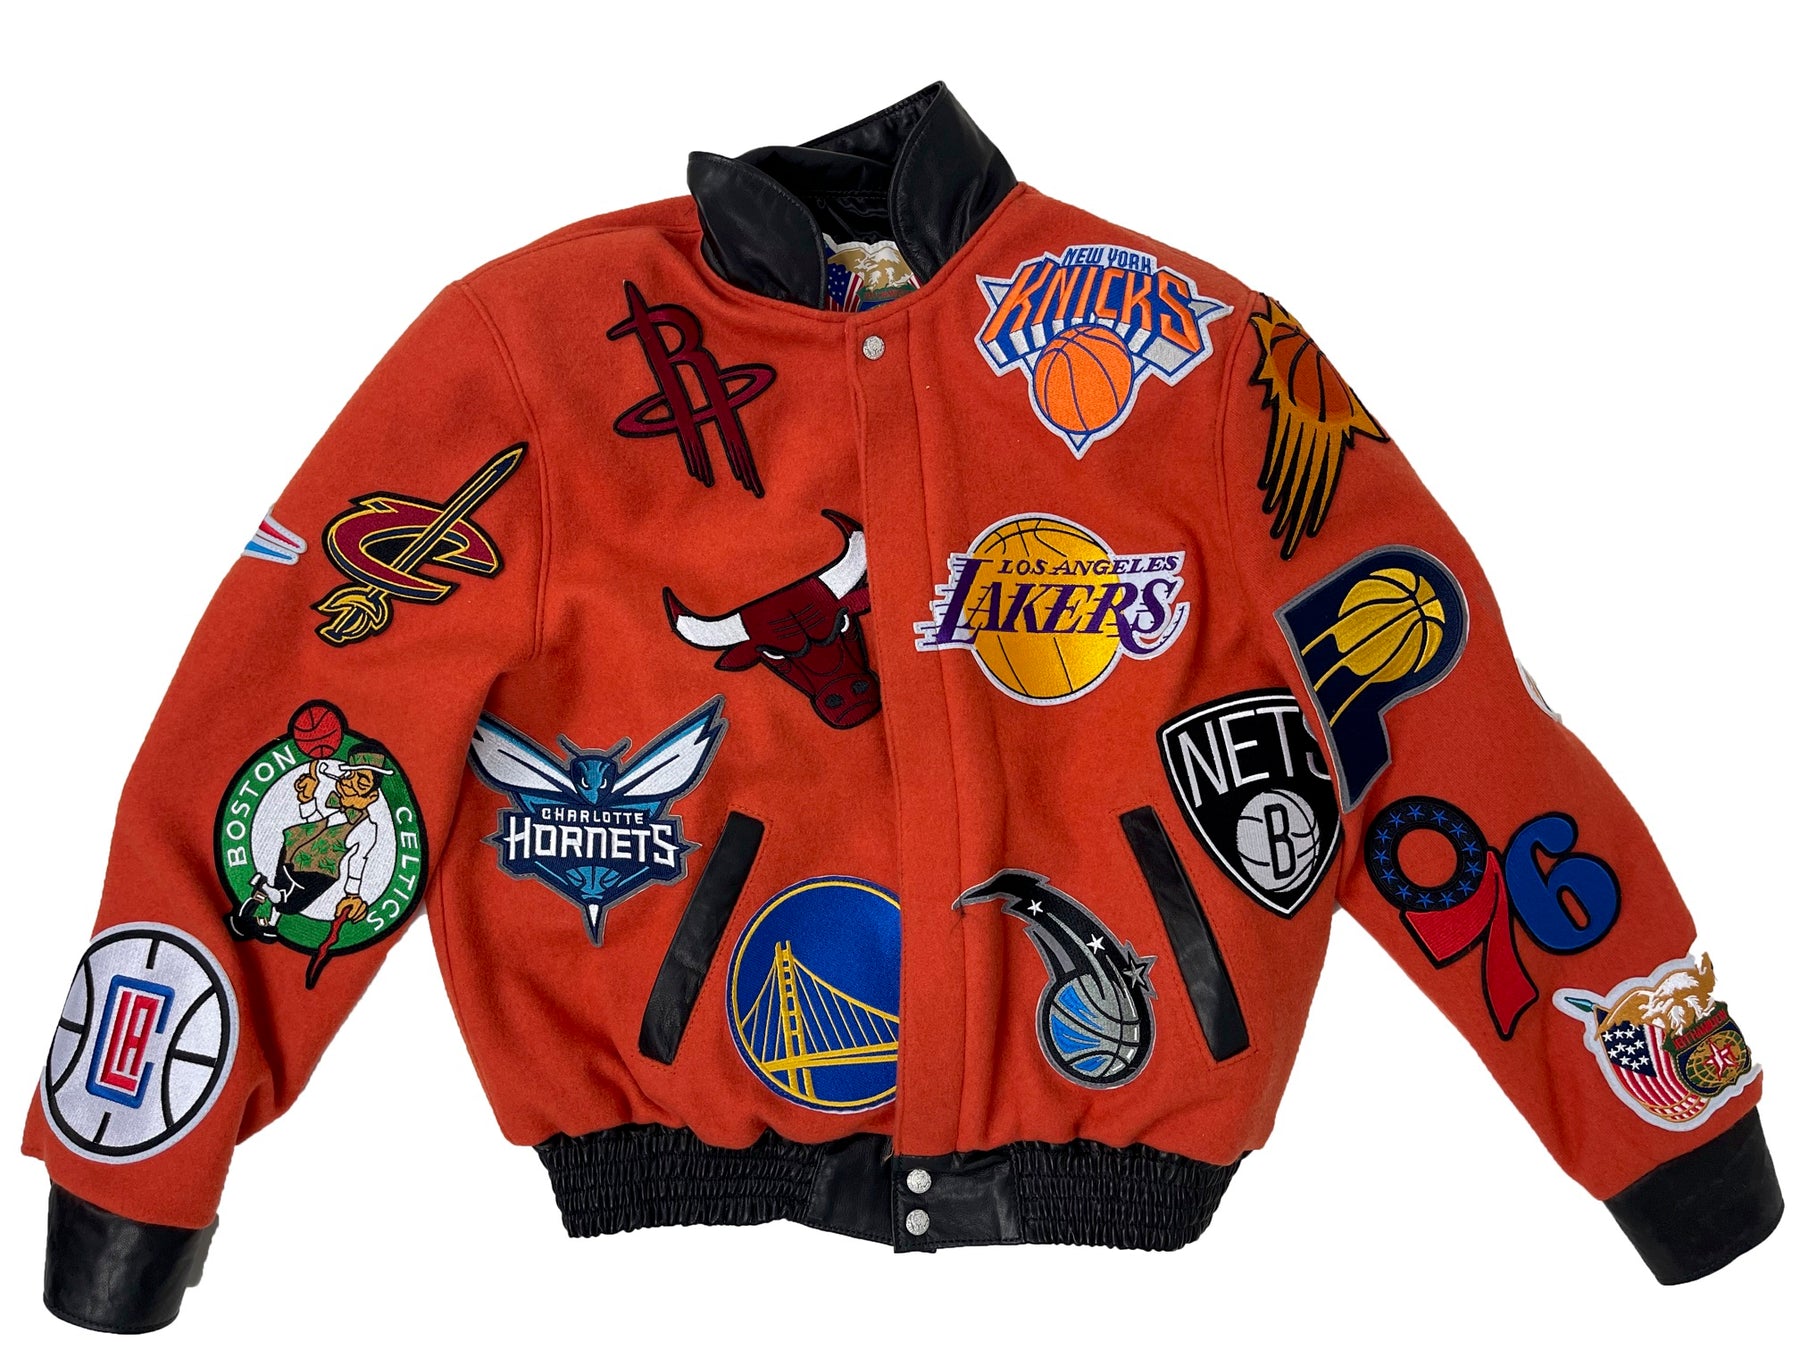 Jeff Hamilton x NBA Collage Wool Jacket - Brown